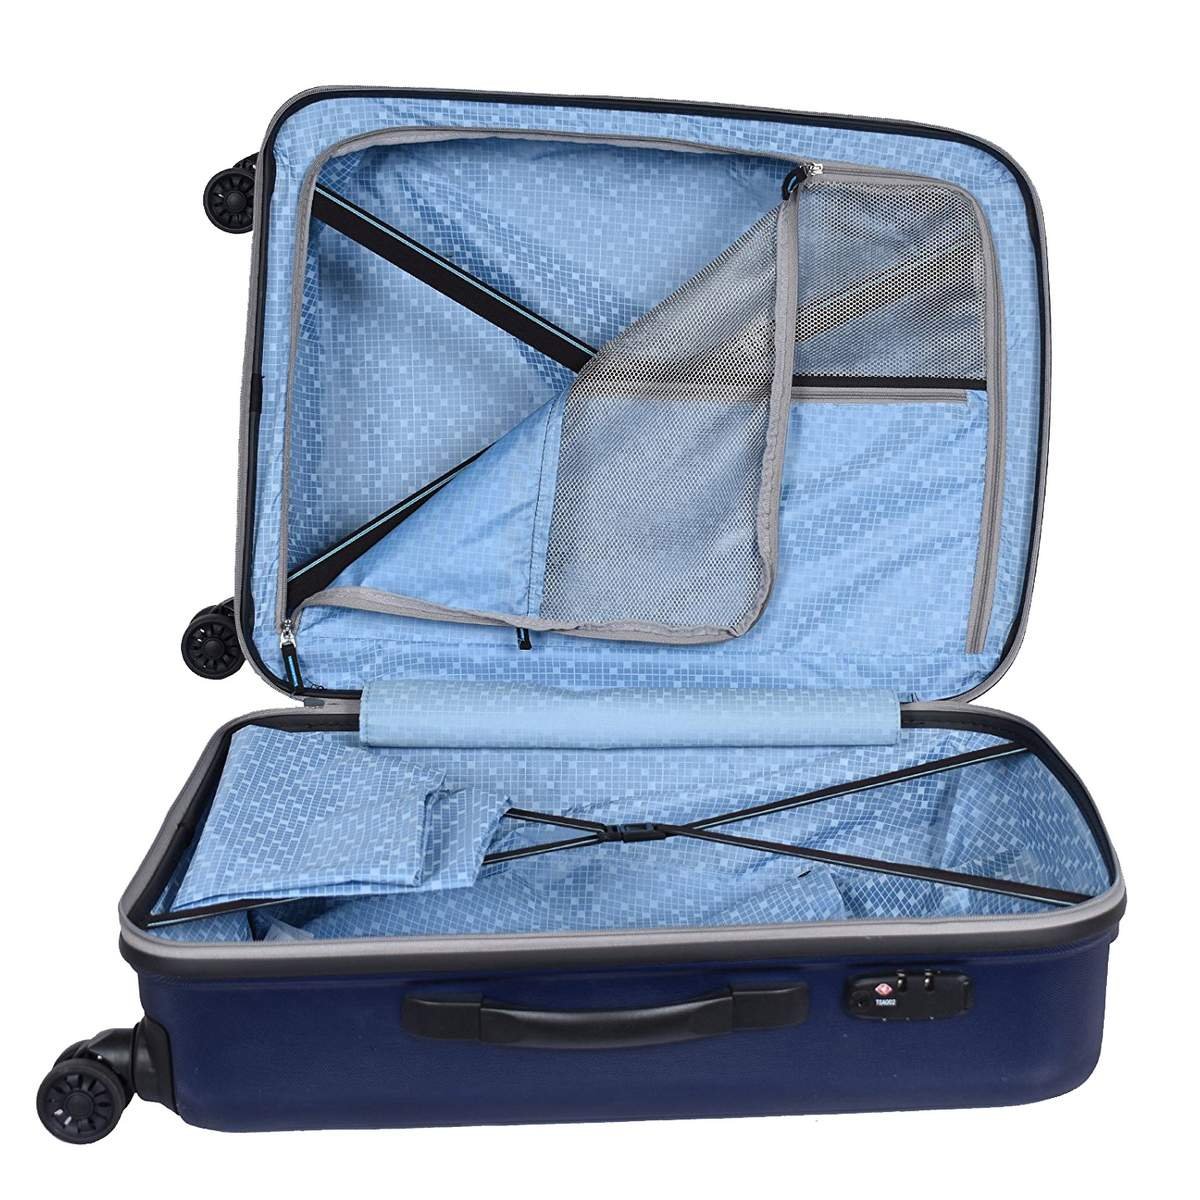 Safari Amaze 4W 79 cm Hard Luggage Bag